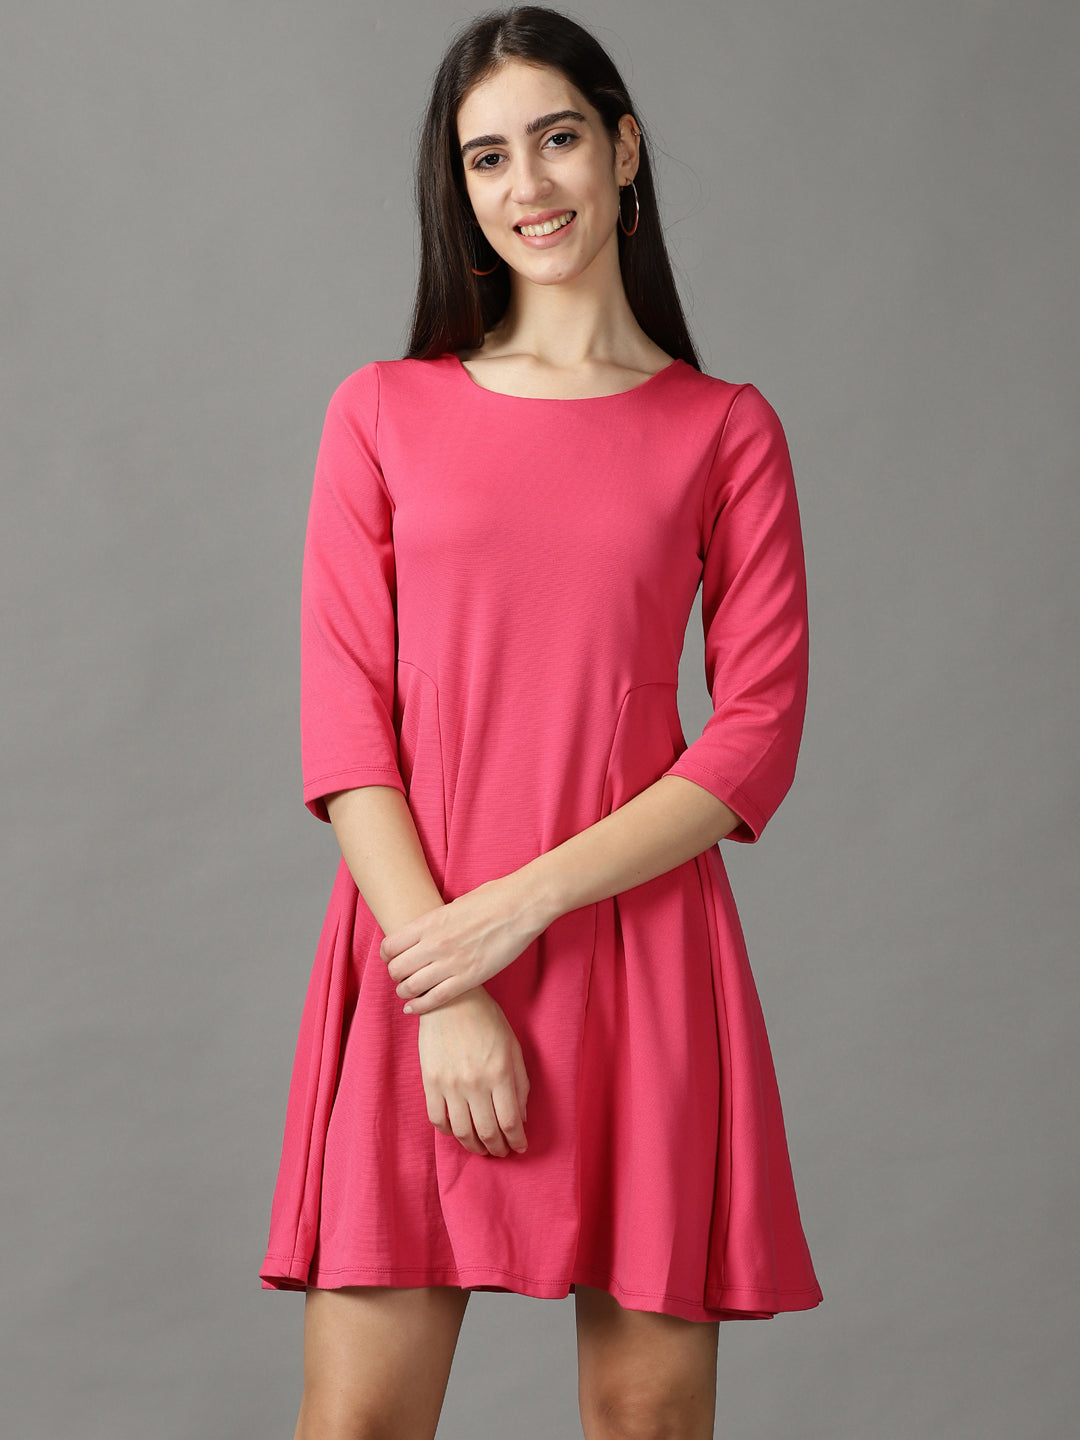 Women's Pink Solid A-Line Dress